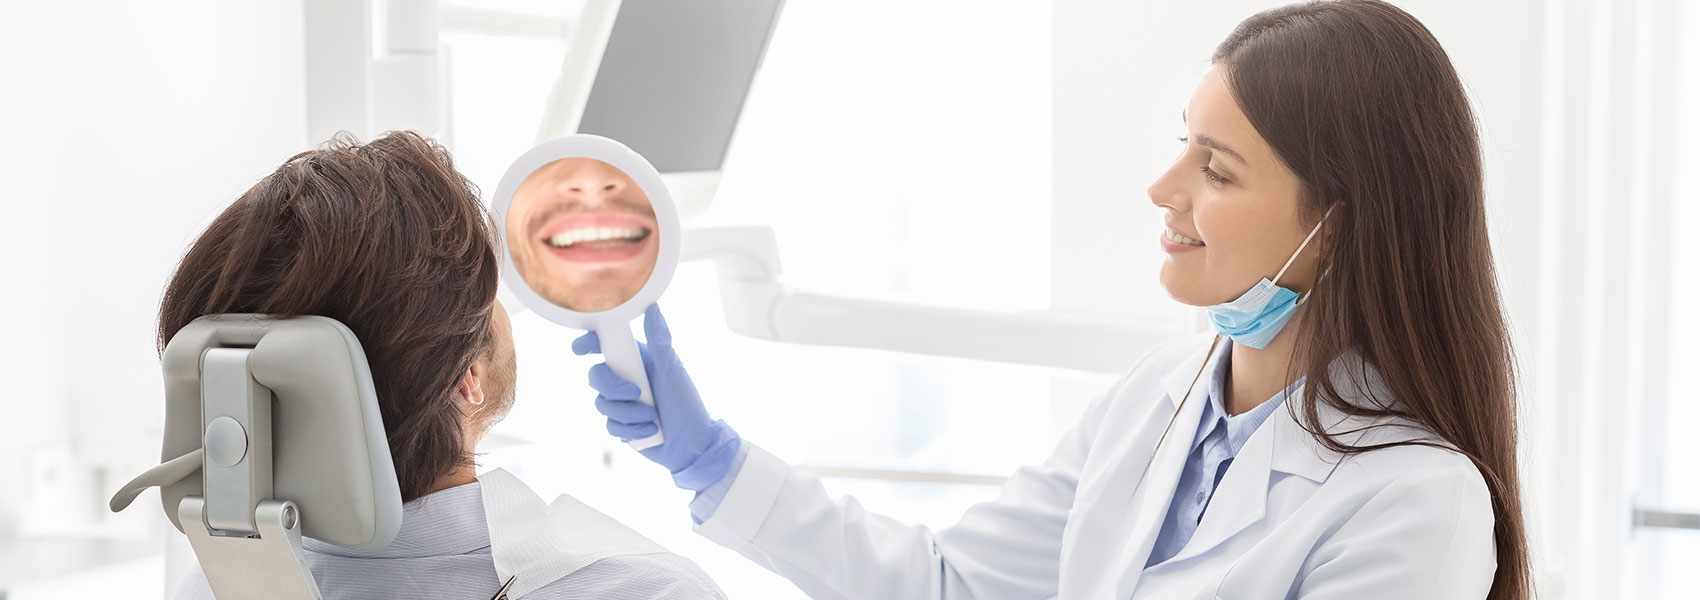 Patient looking at his teeth